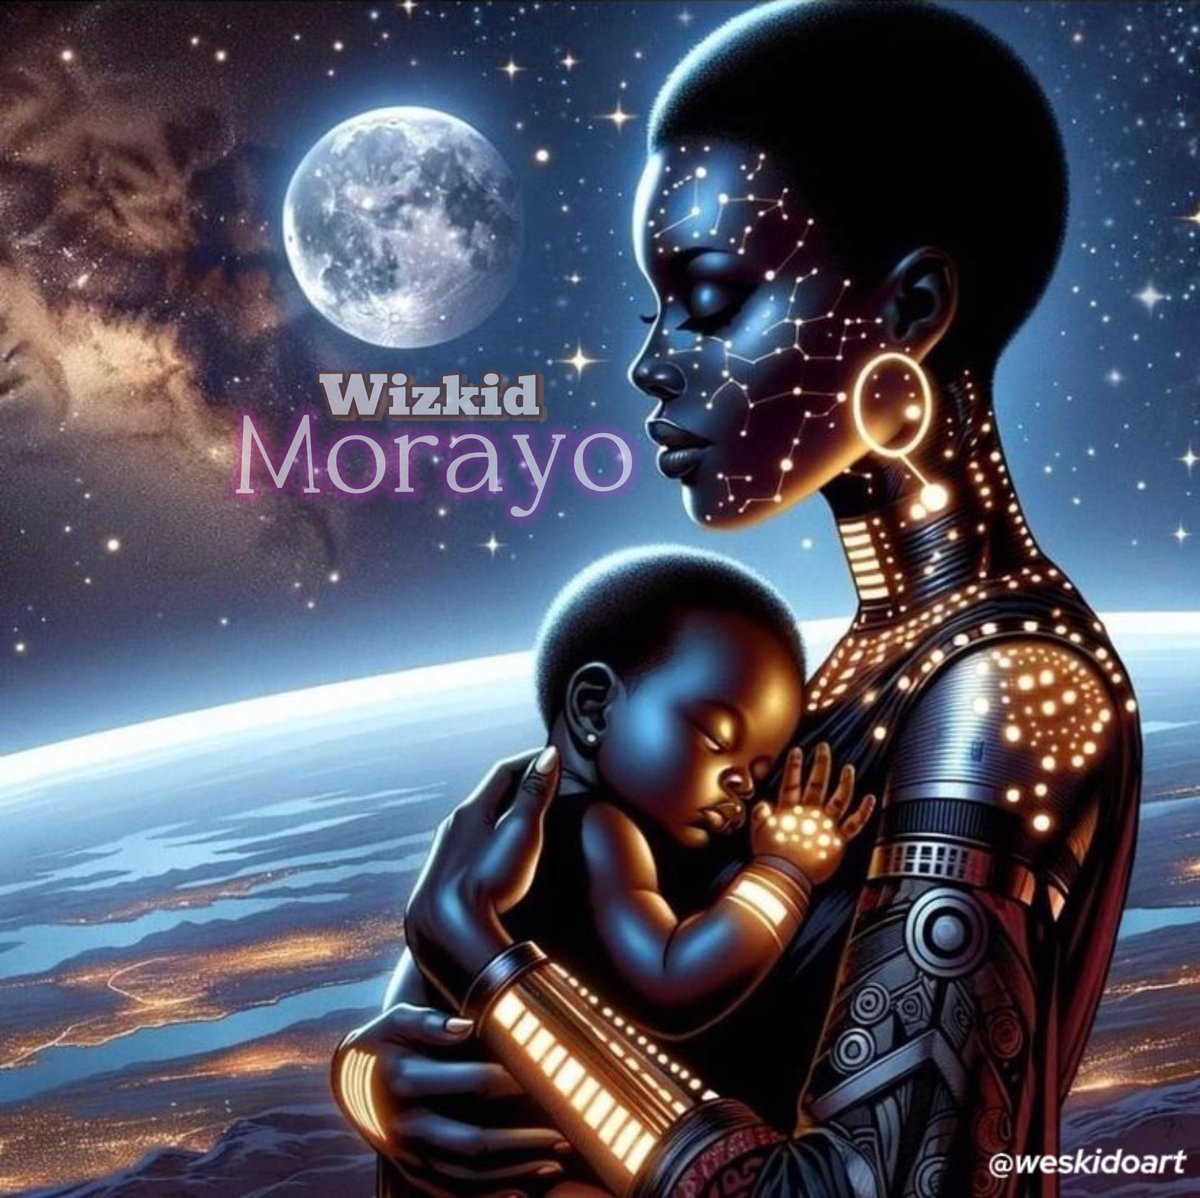 Wizkid Morayo album will be bigger than made in Lagos 😮‍💨🦅🔥🔥🔥
@wizkidayo